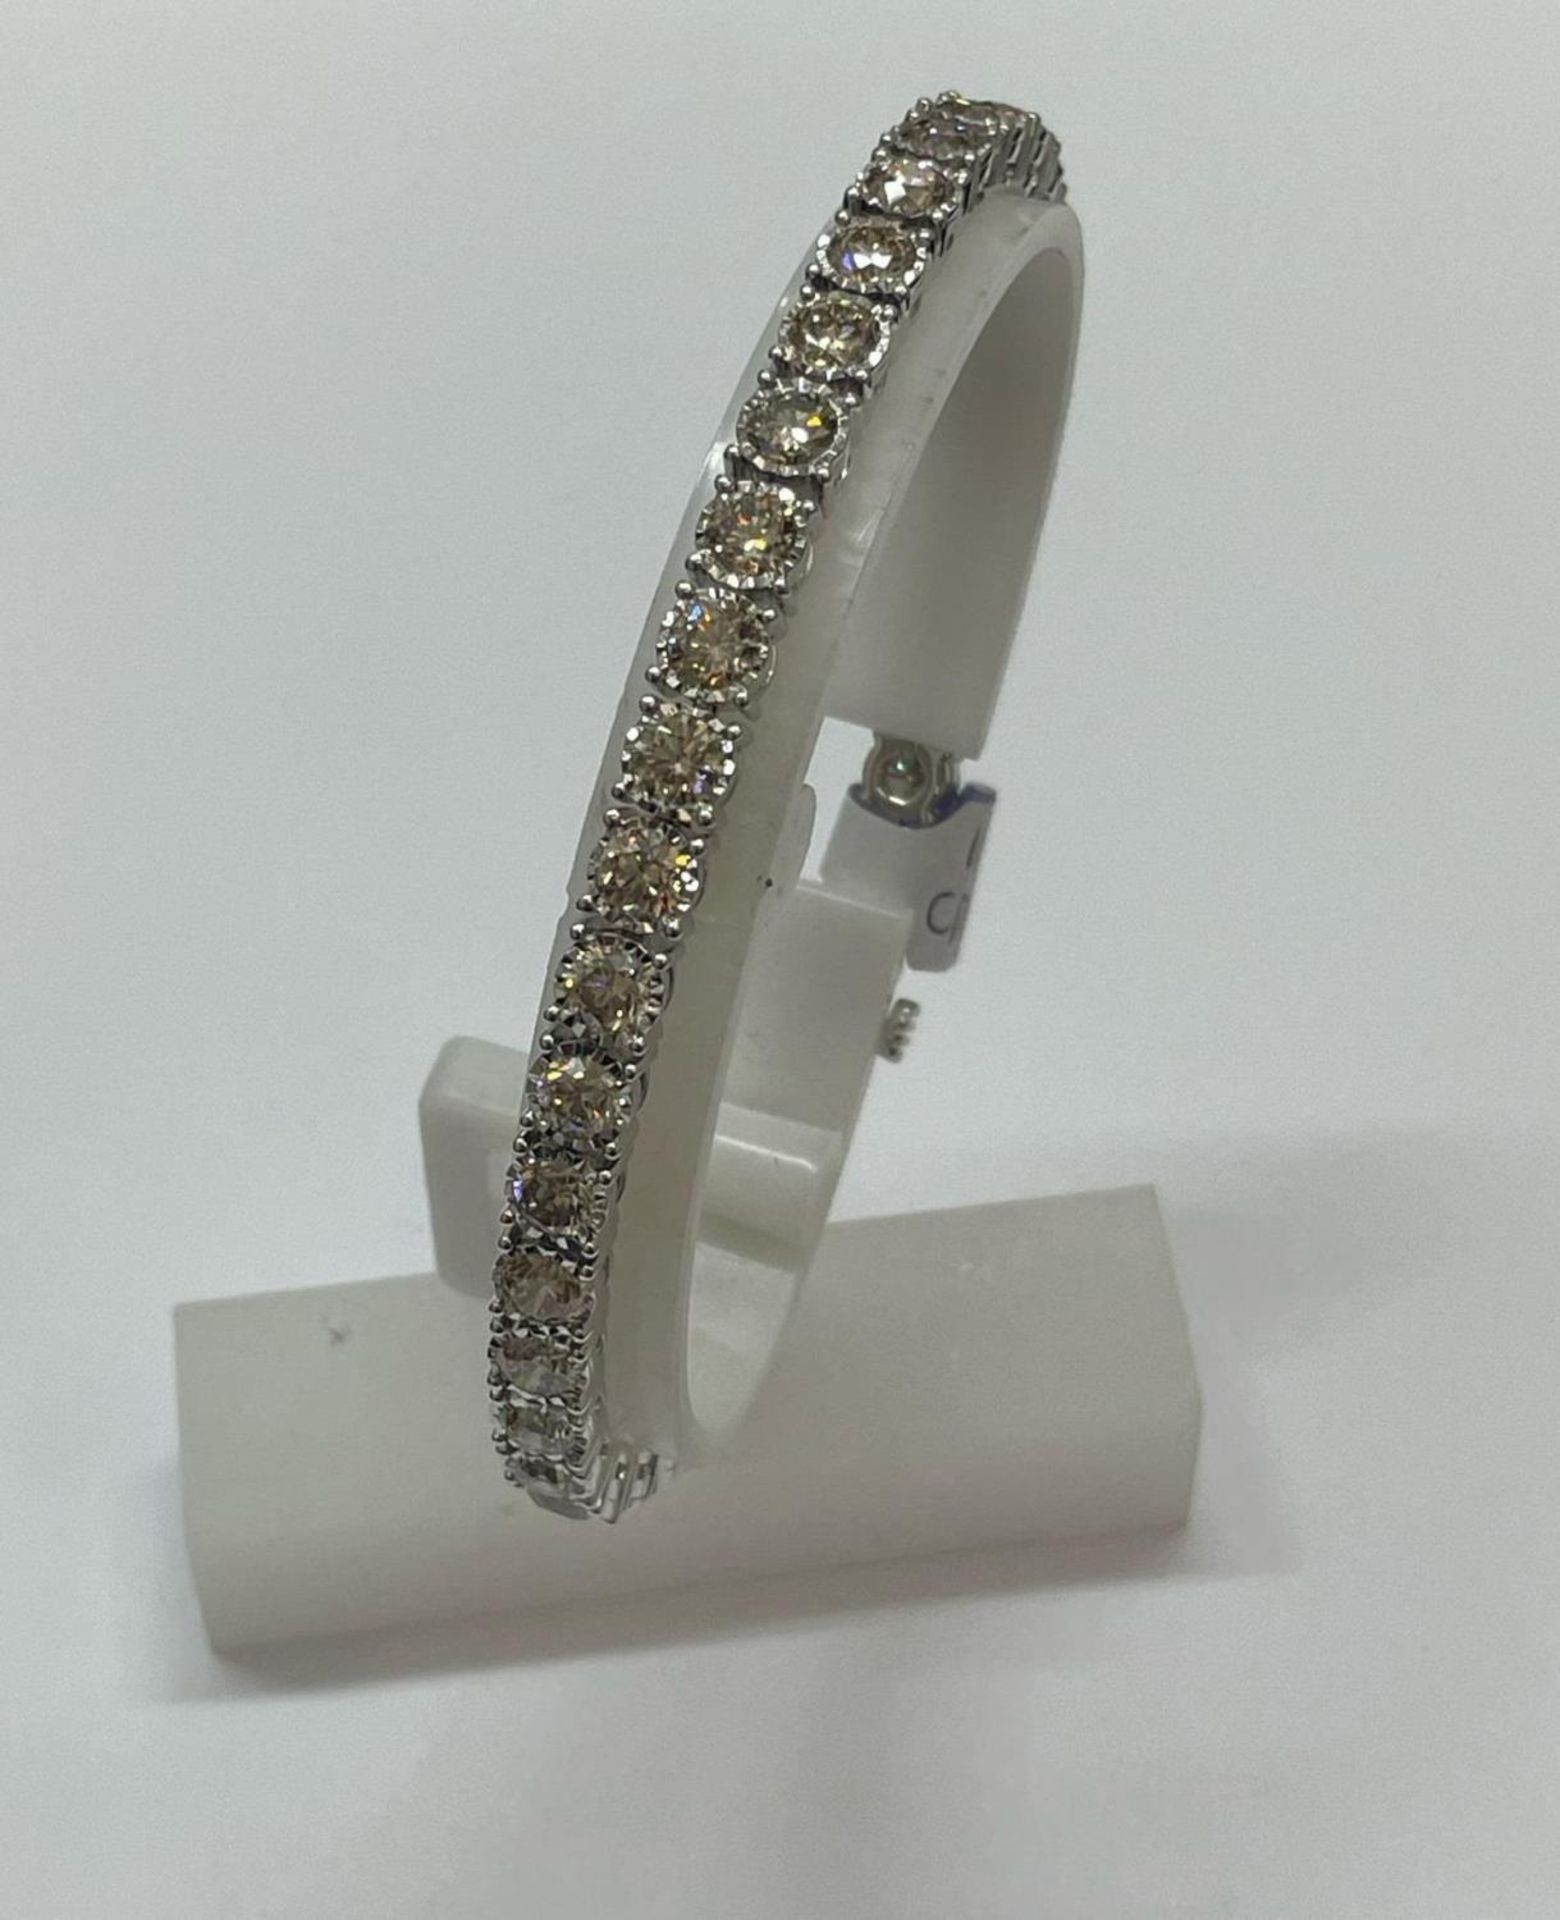 A NEW 9 CARAT WHITE GOLD BRACELET, SET WITH BRILLIANT CUT DIAMONDS - TOTAL DIAMOND WEIGHT 11.10